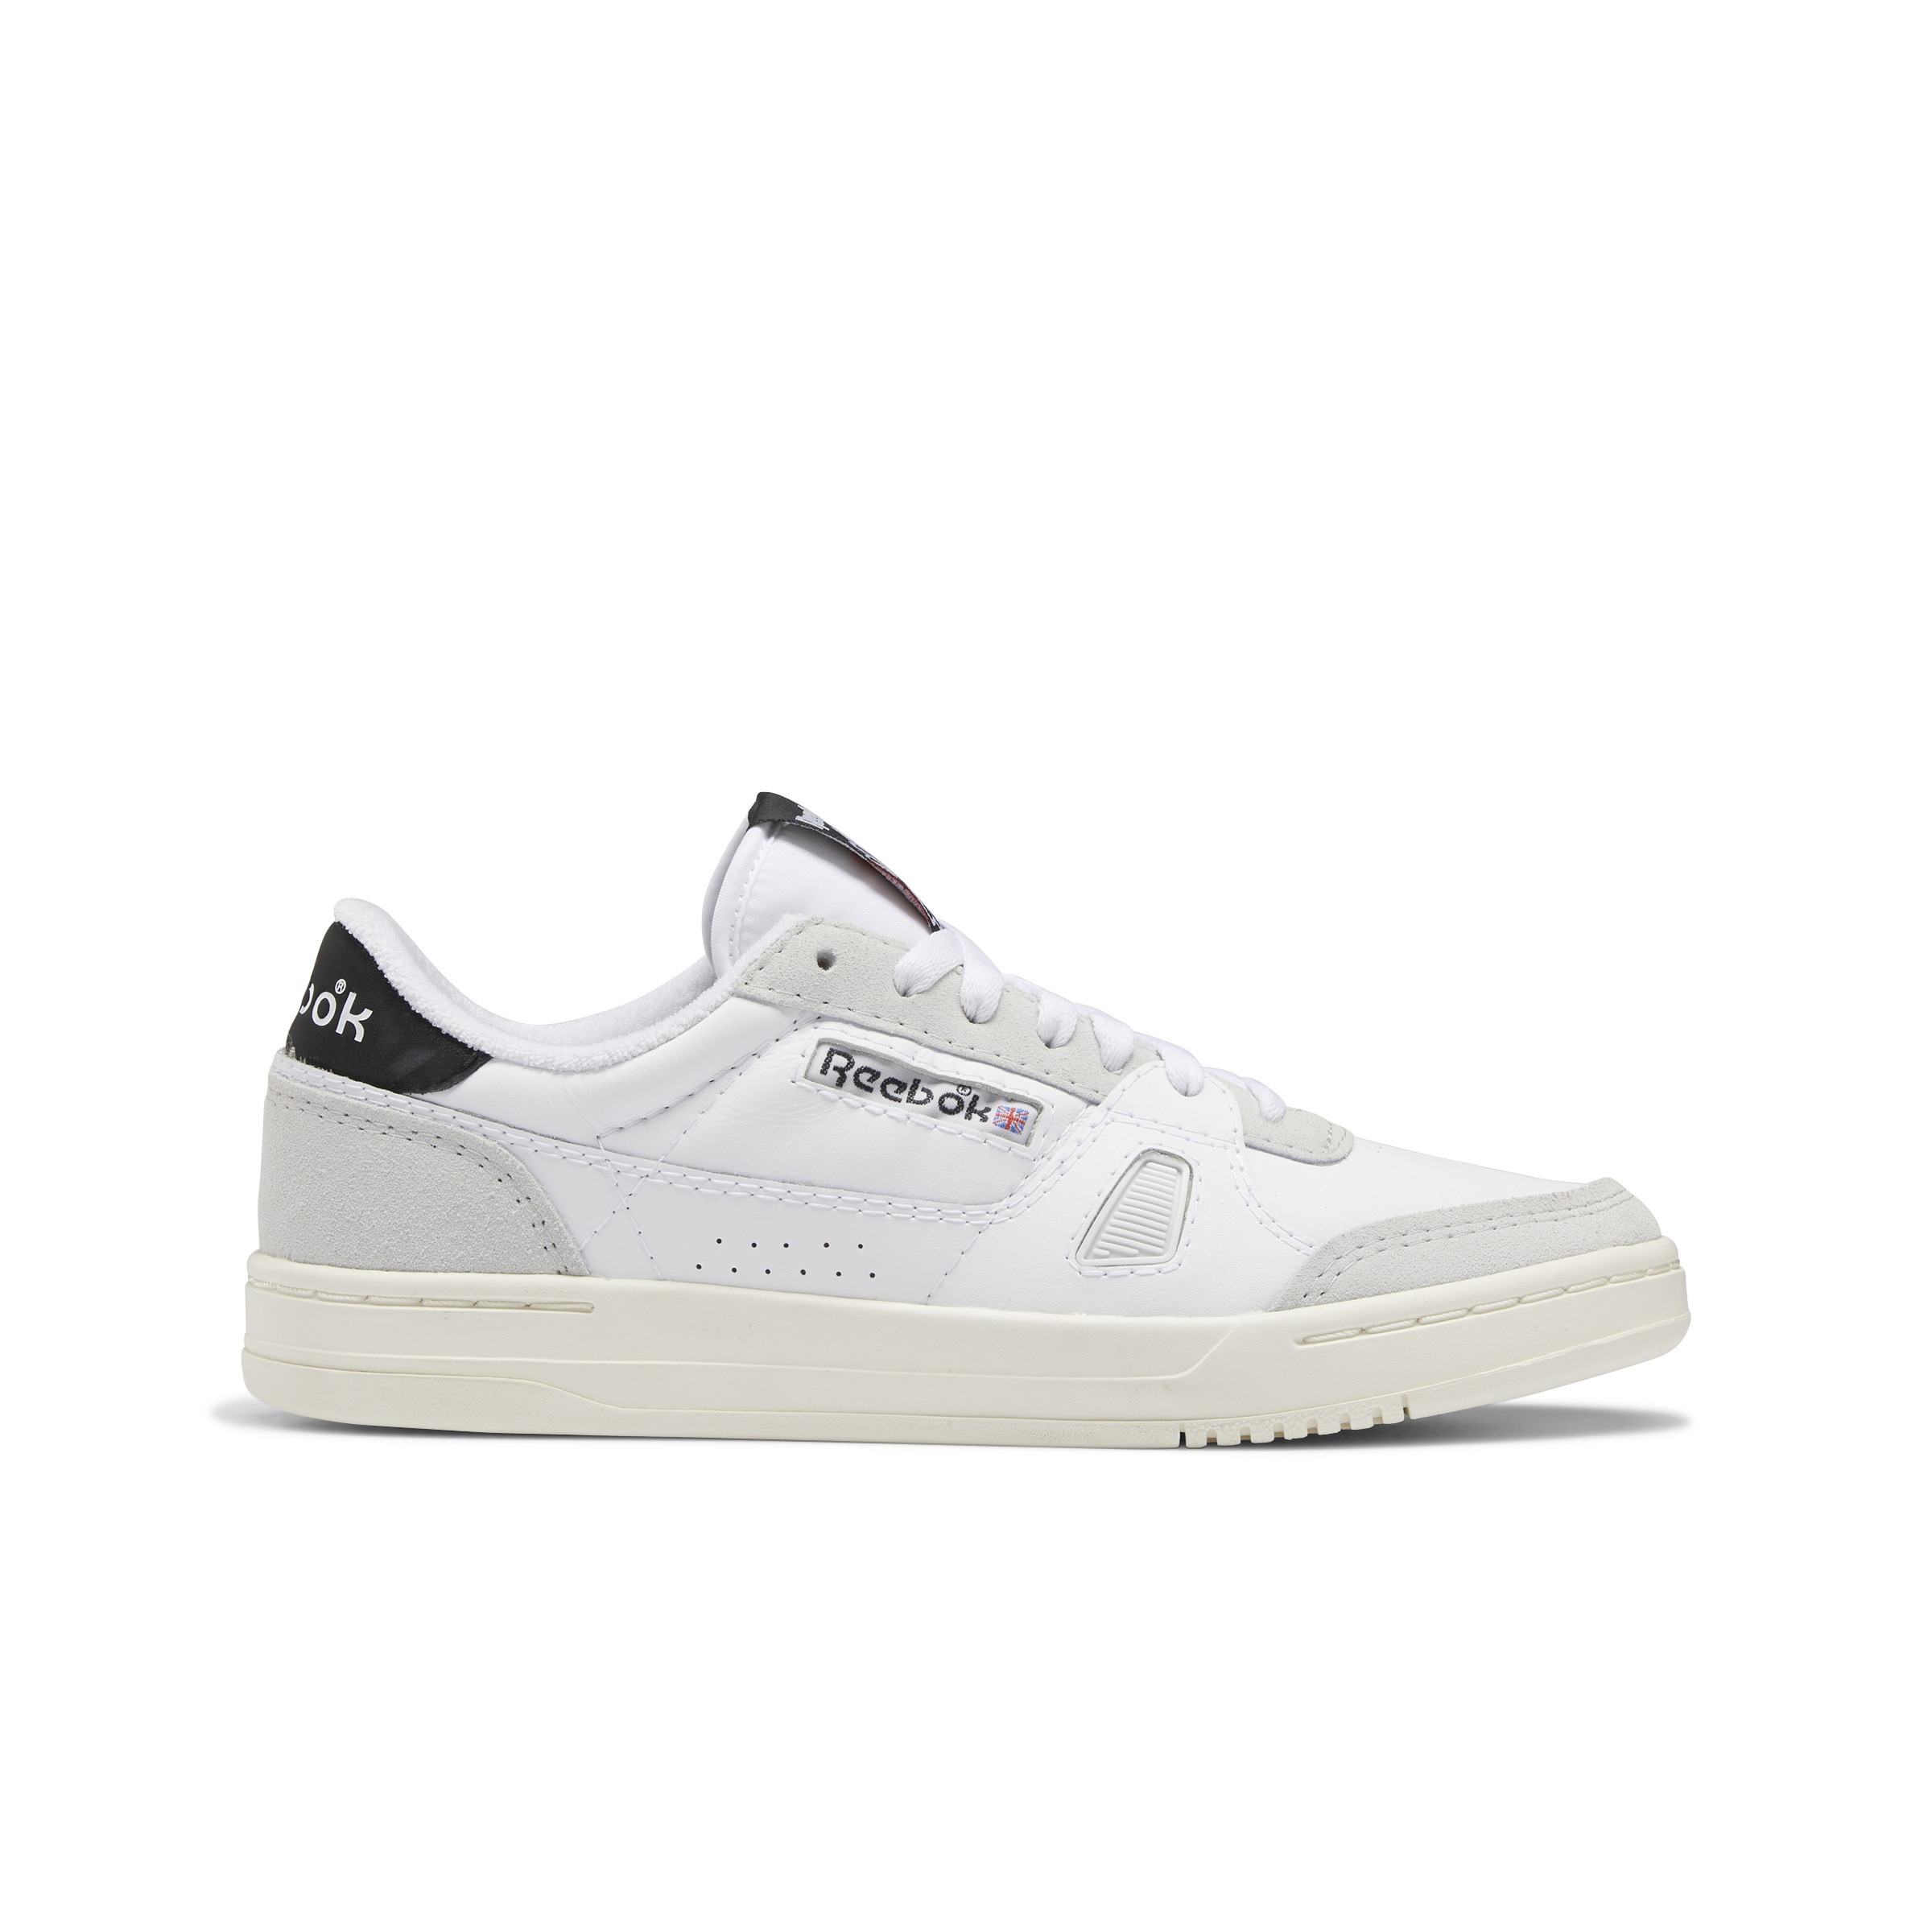 Reebok - LT Court shoes, White, large image number 0